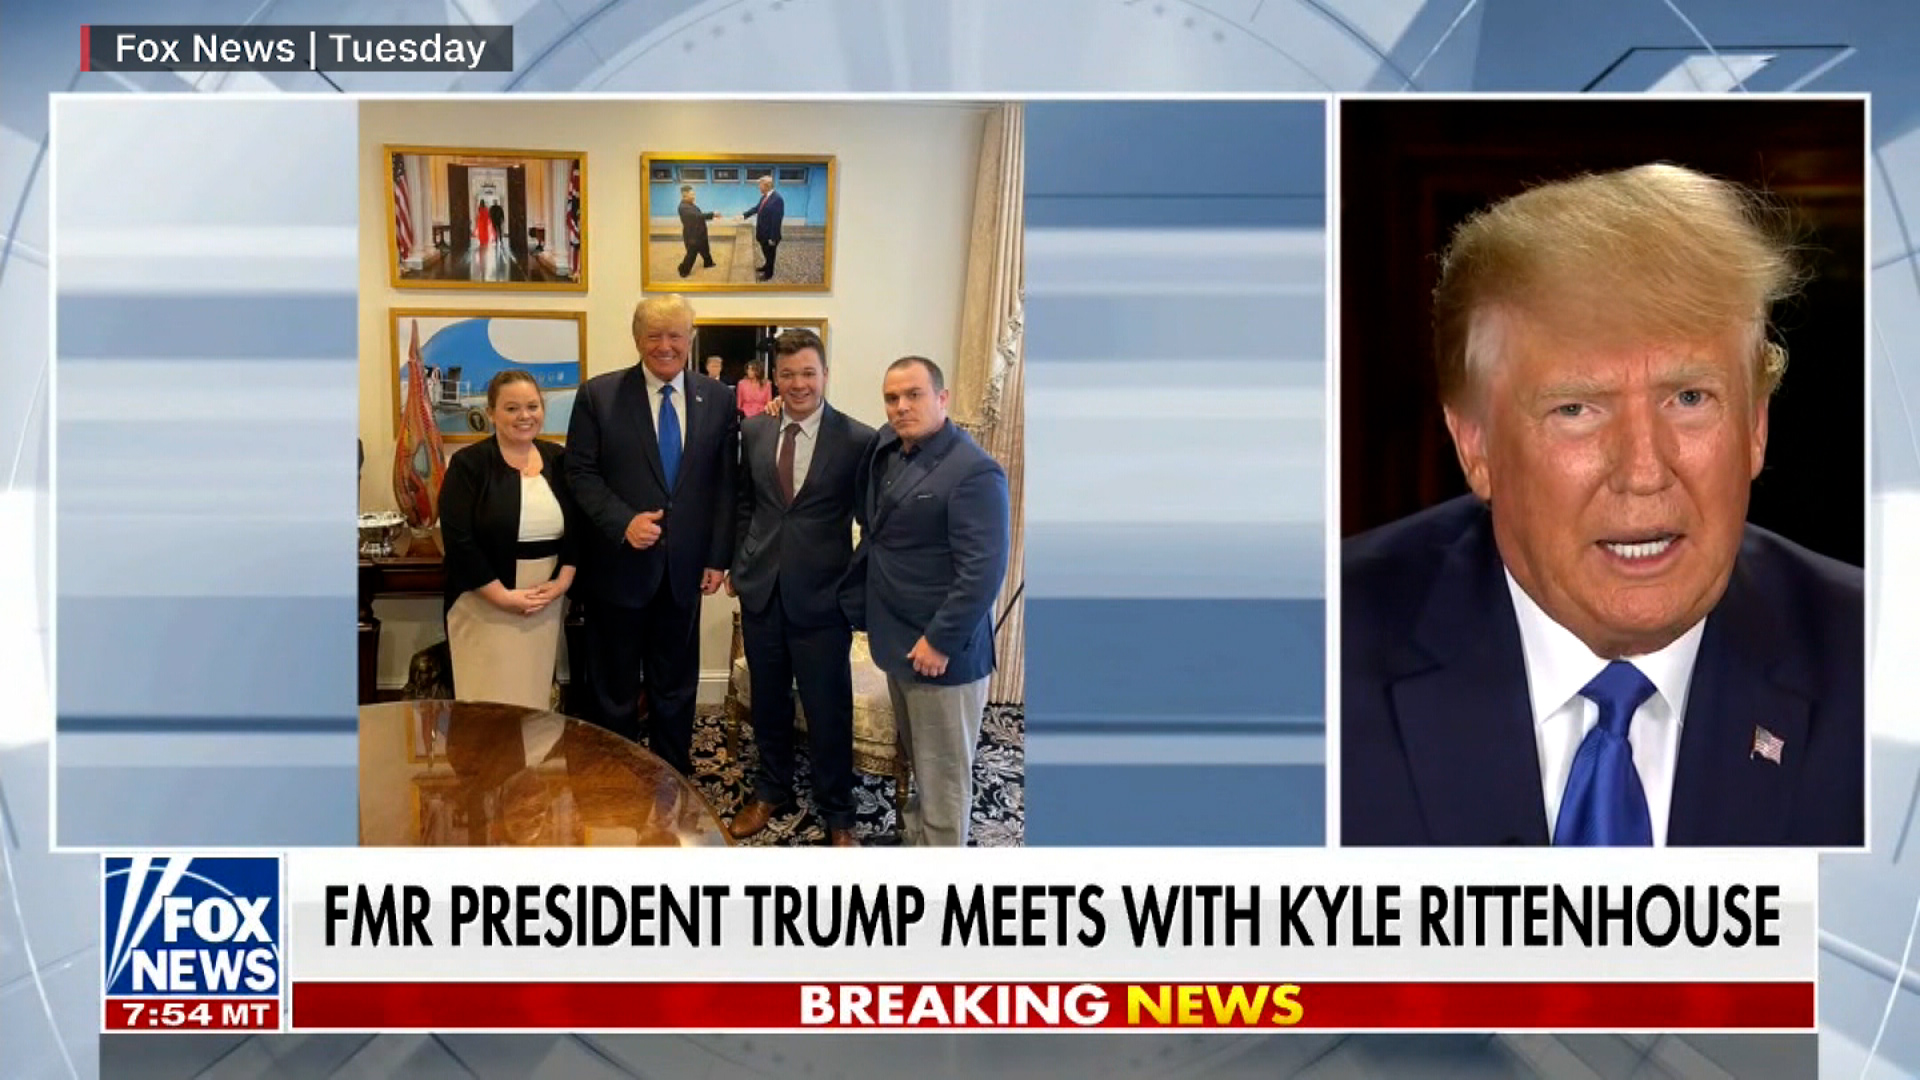 Trump details Rittenhouse visit to Mar-a-Lago on Fox News - CNN Video